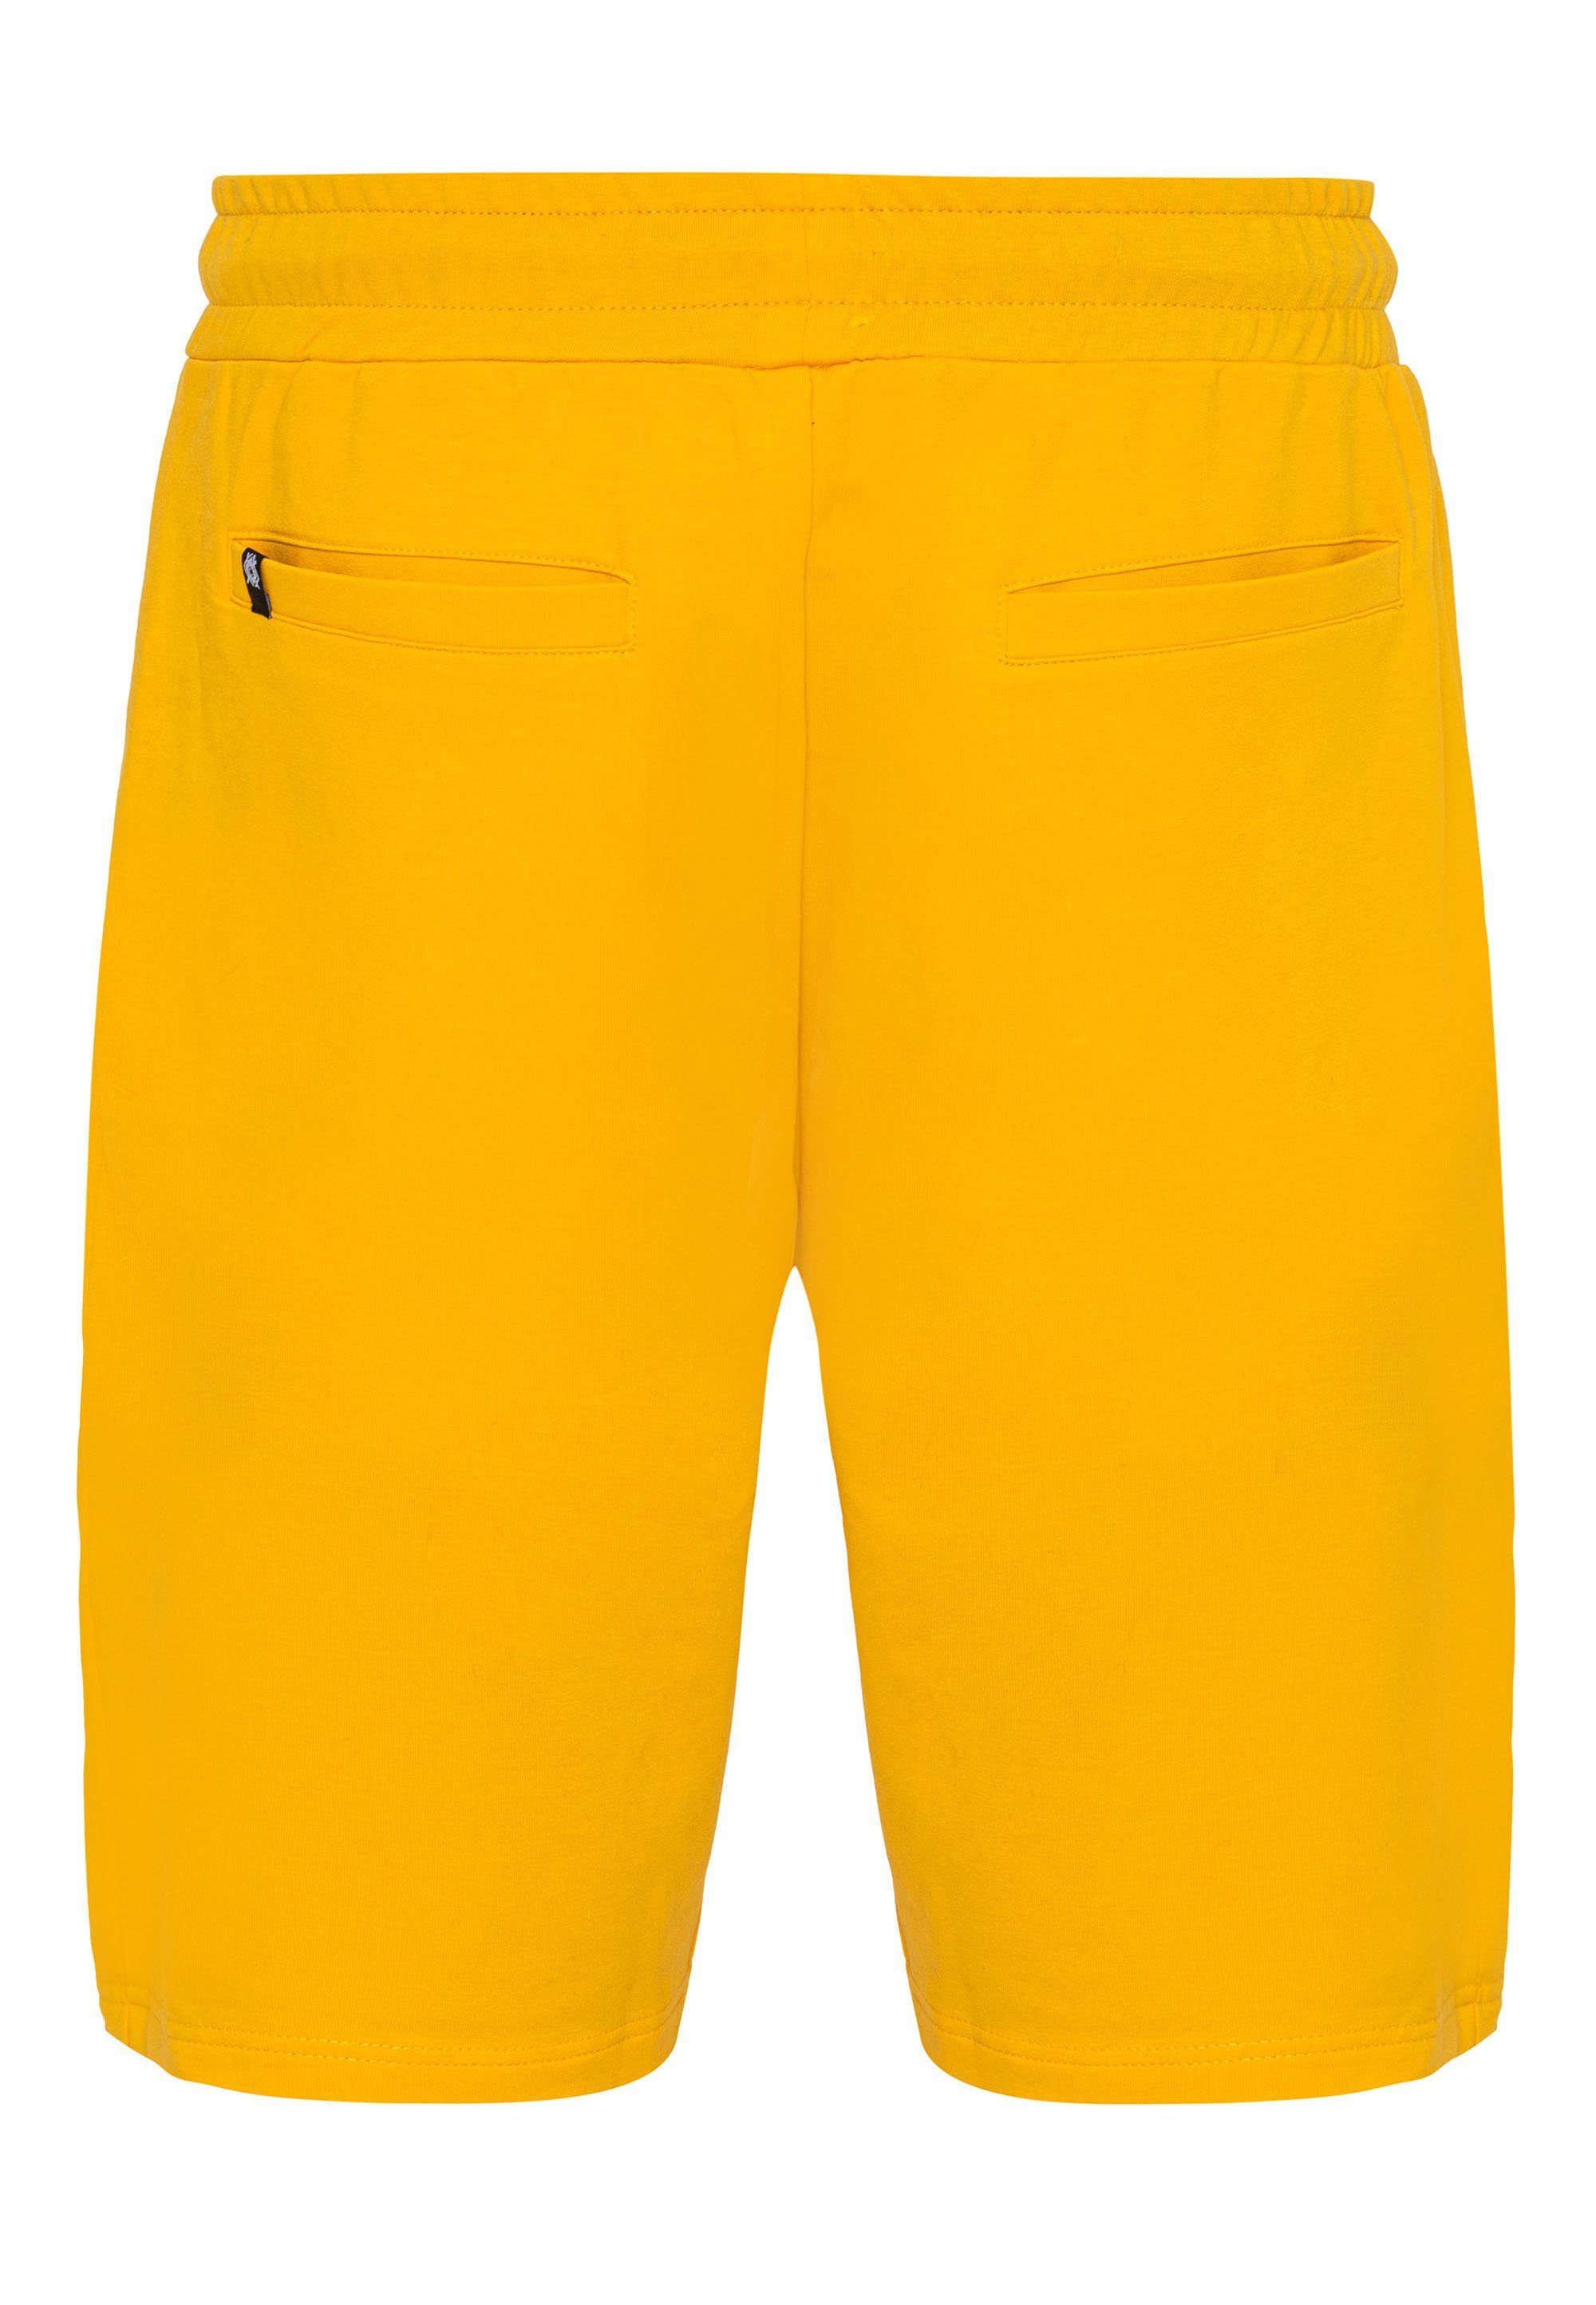 Cipo & Baxx Shorts gelb Look in sportlichem